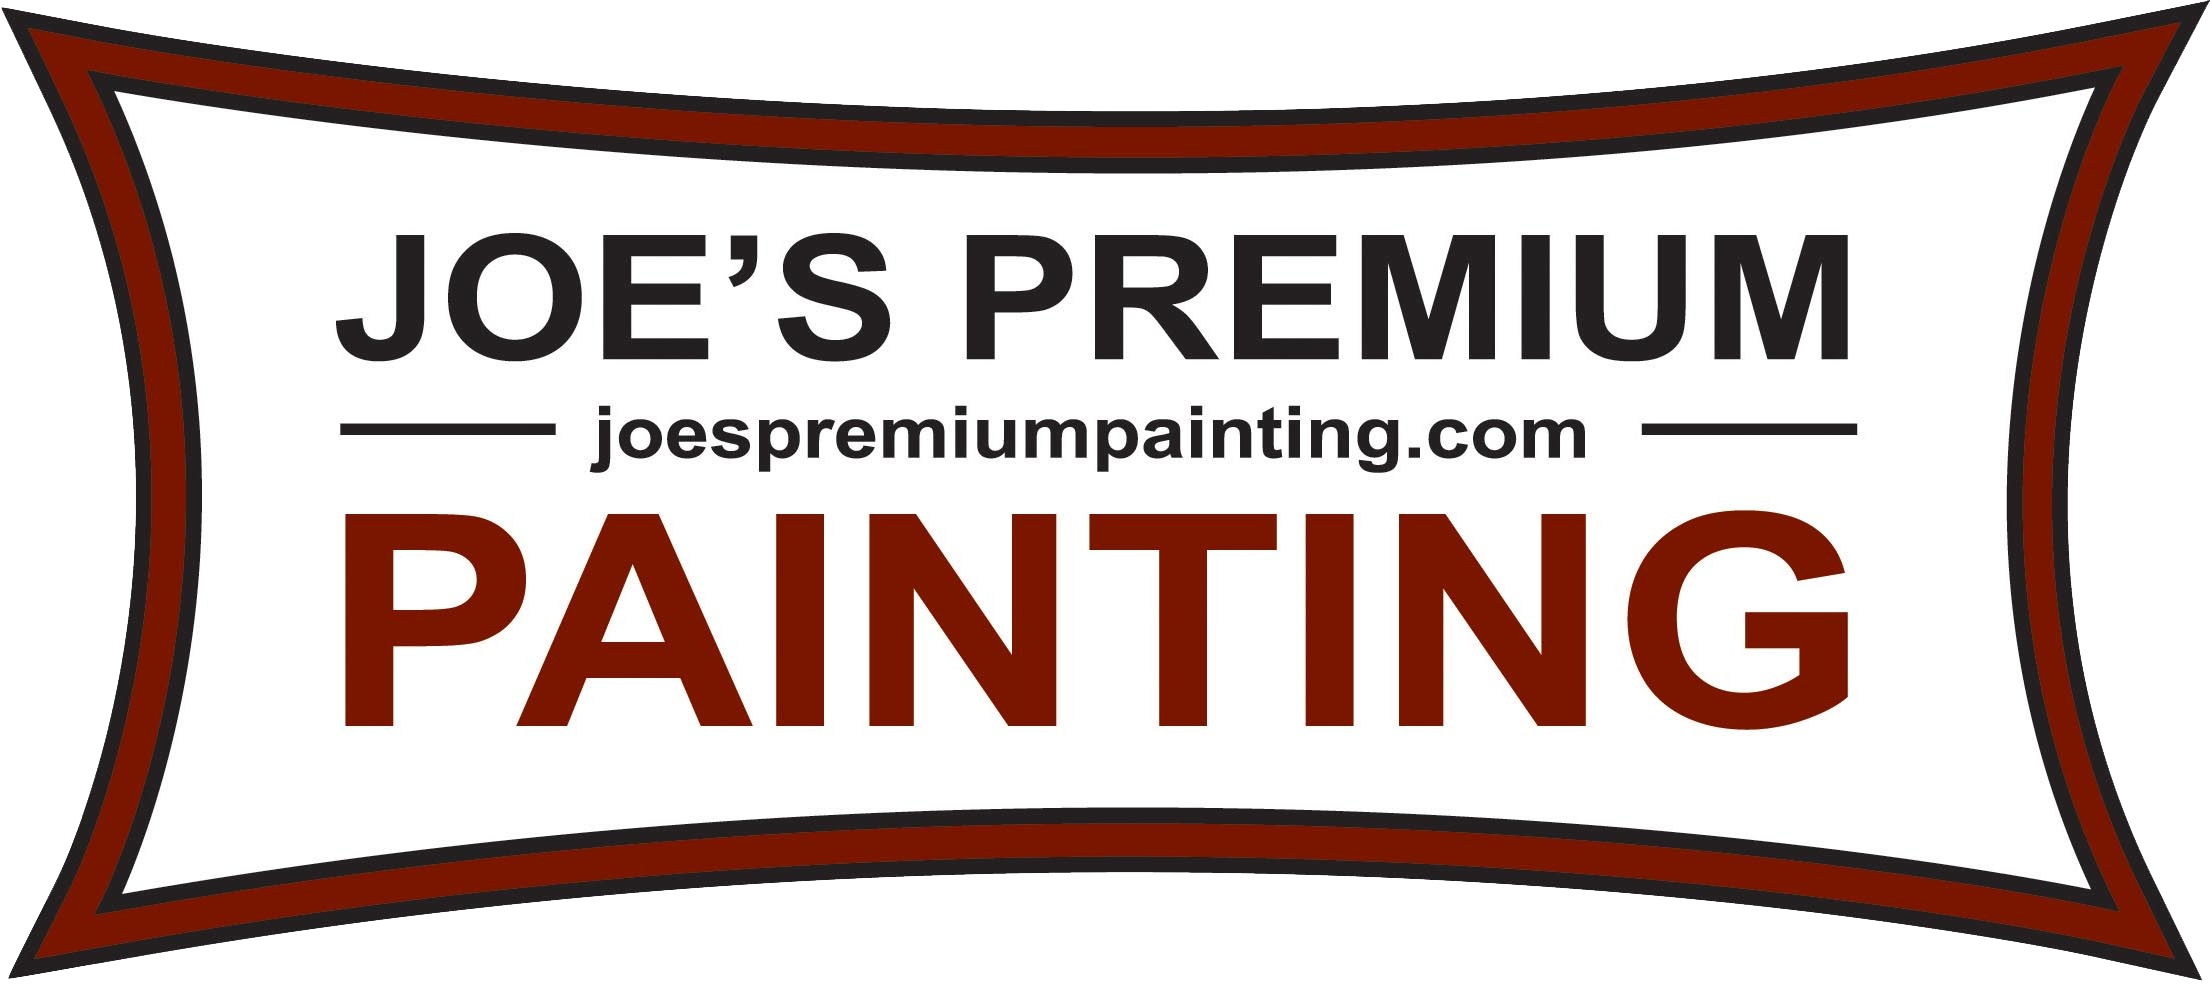 Joe's Premium Painting, Professional residential painting service of Los Alamitos, Seal Beach, Rossmoor, Huntington Beach, Cypress, Long Beach, Orange County, Los Angeles County